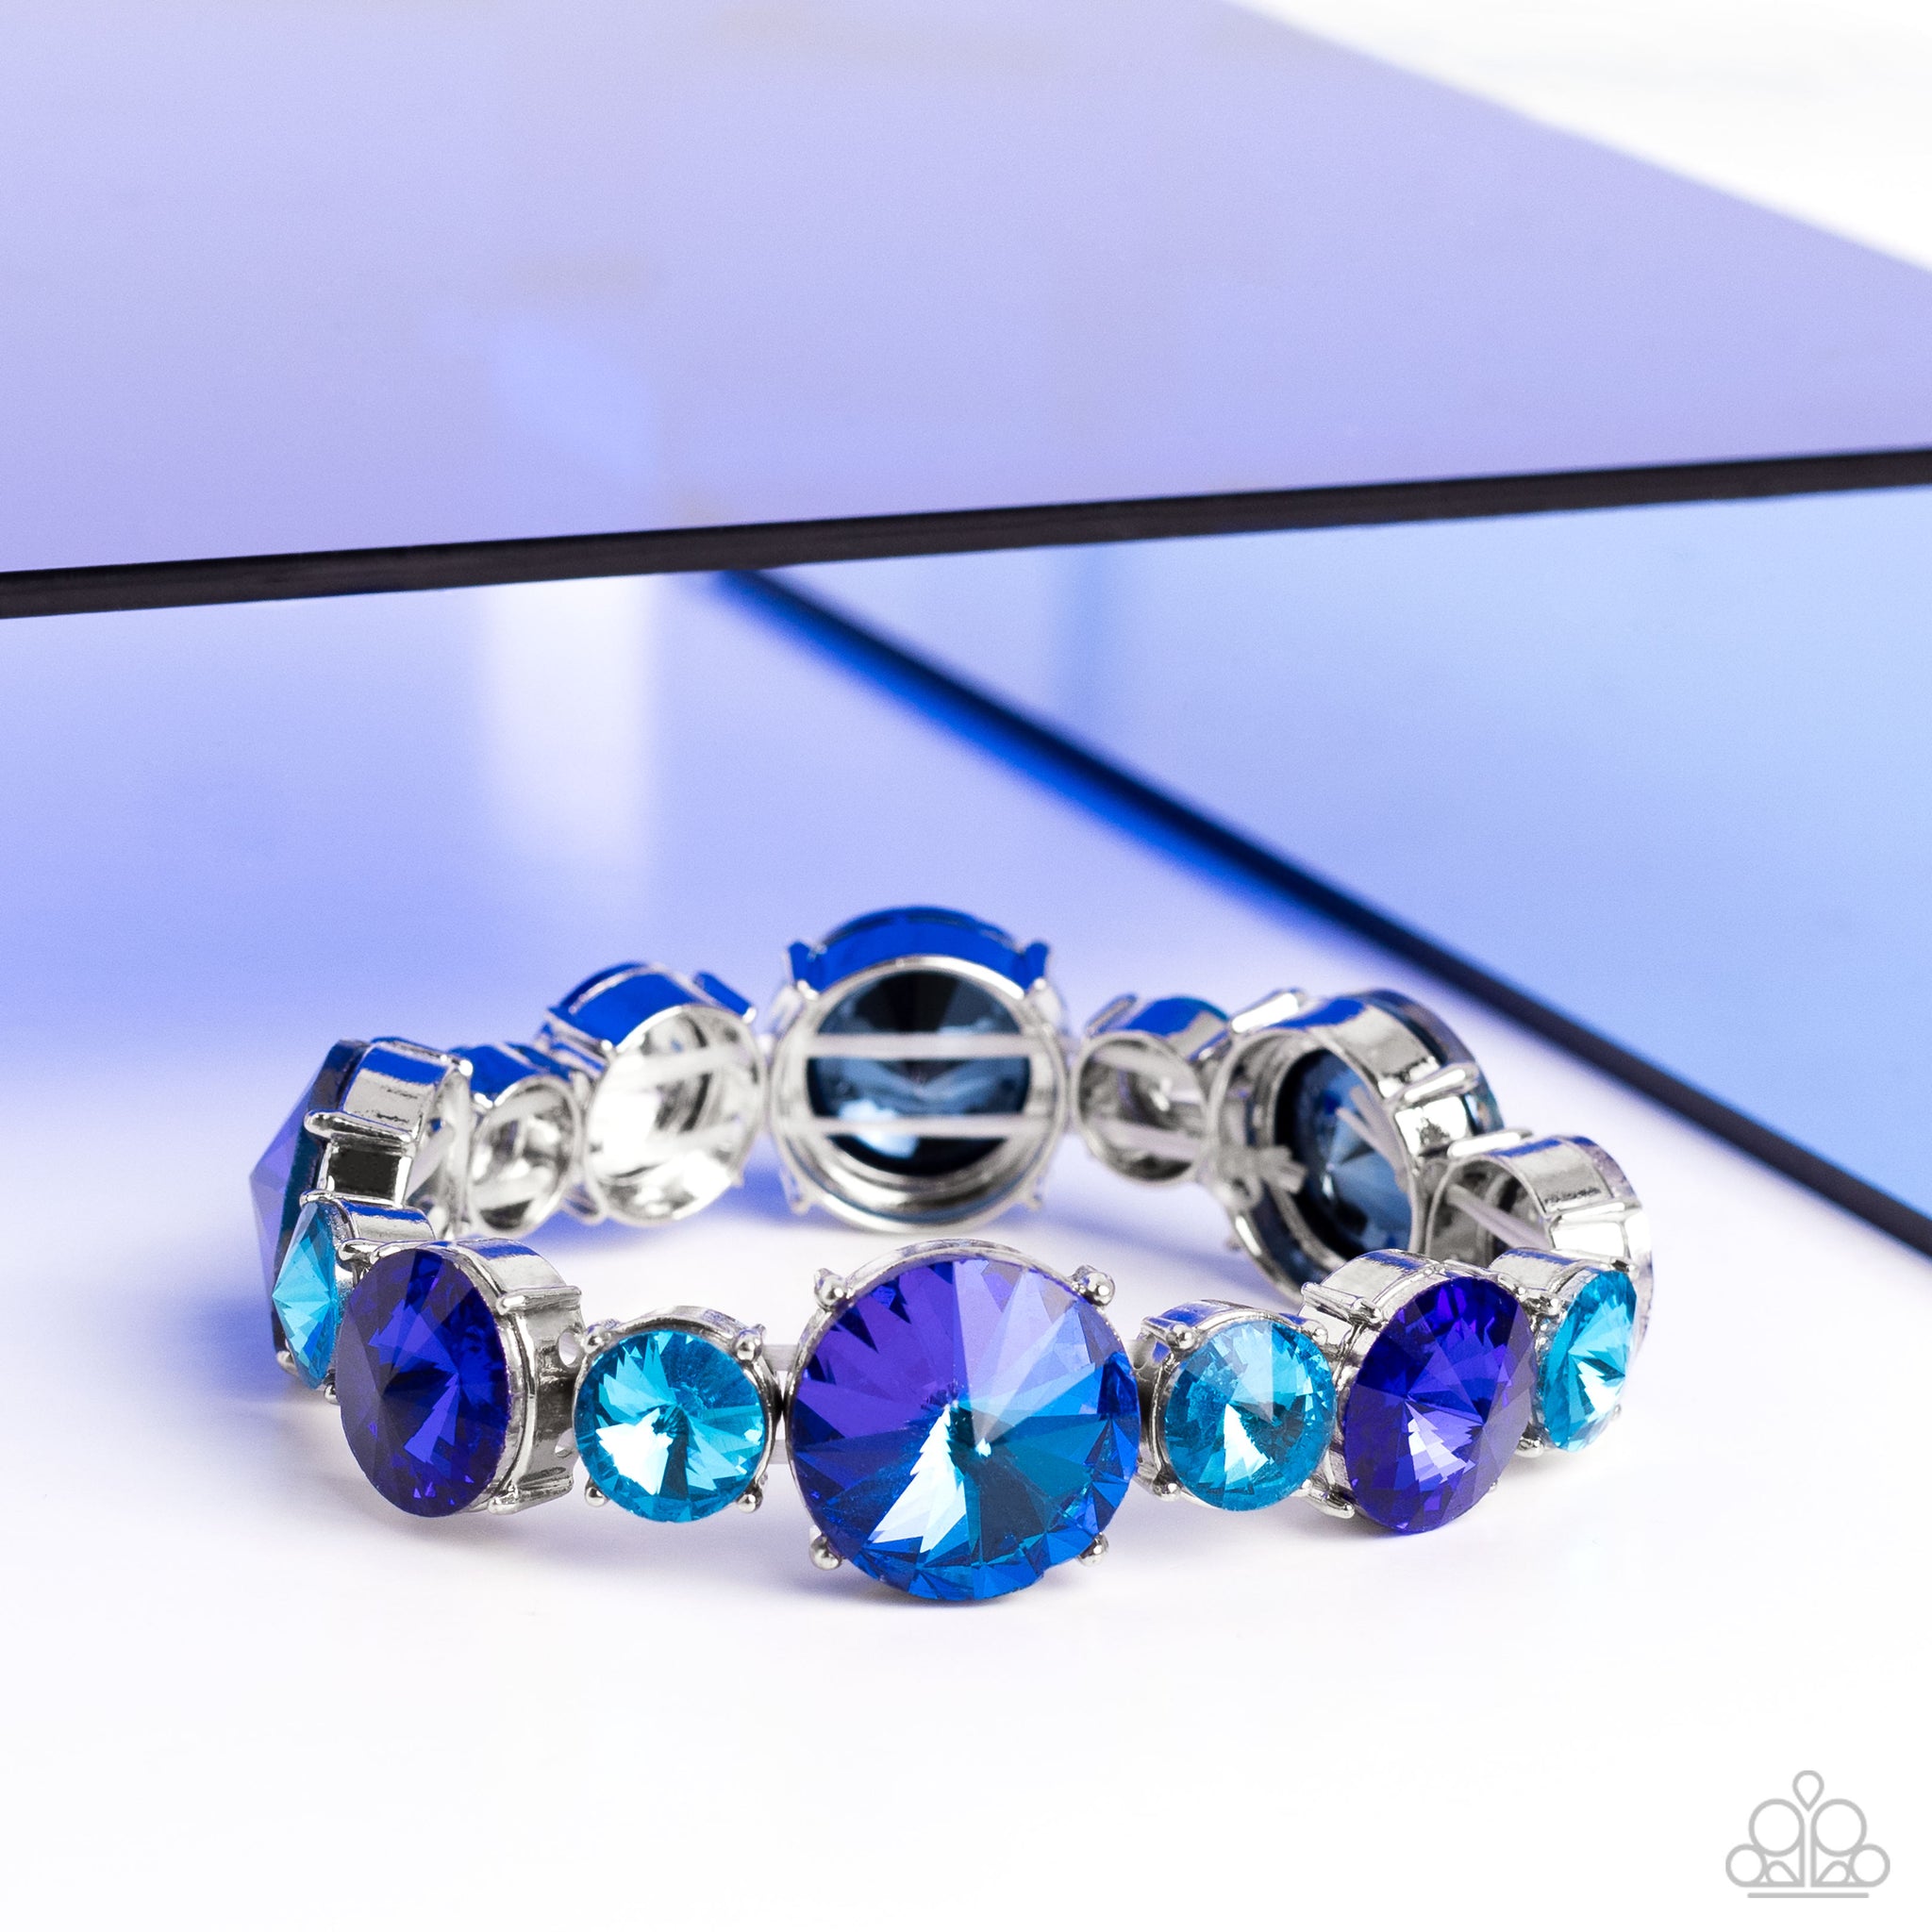 Refreshing Radiance Blue Bracelet